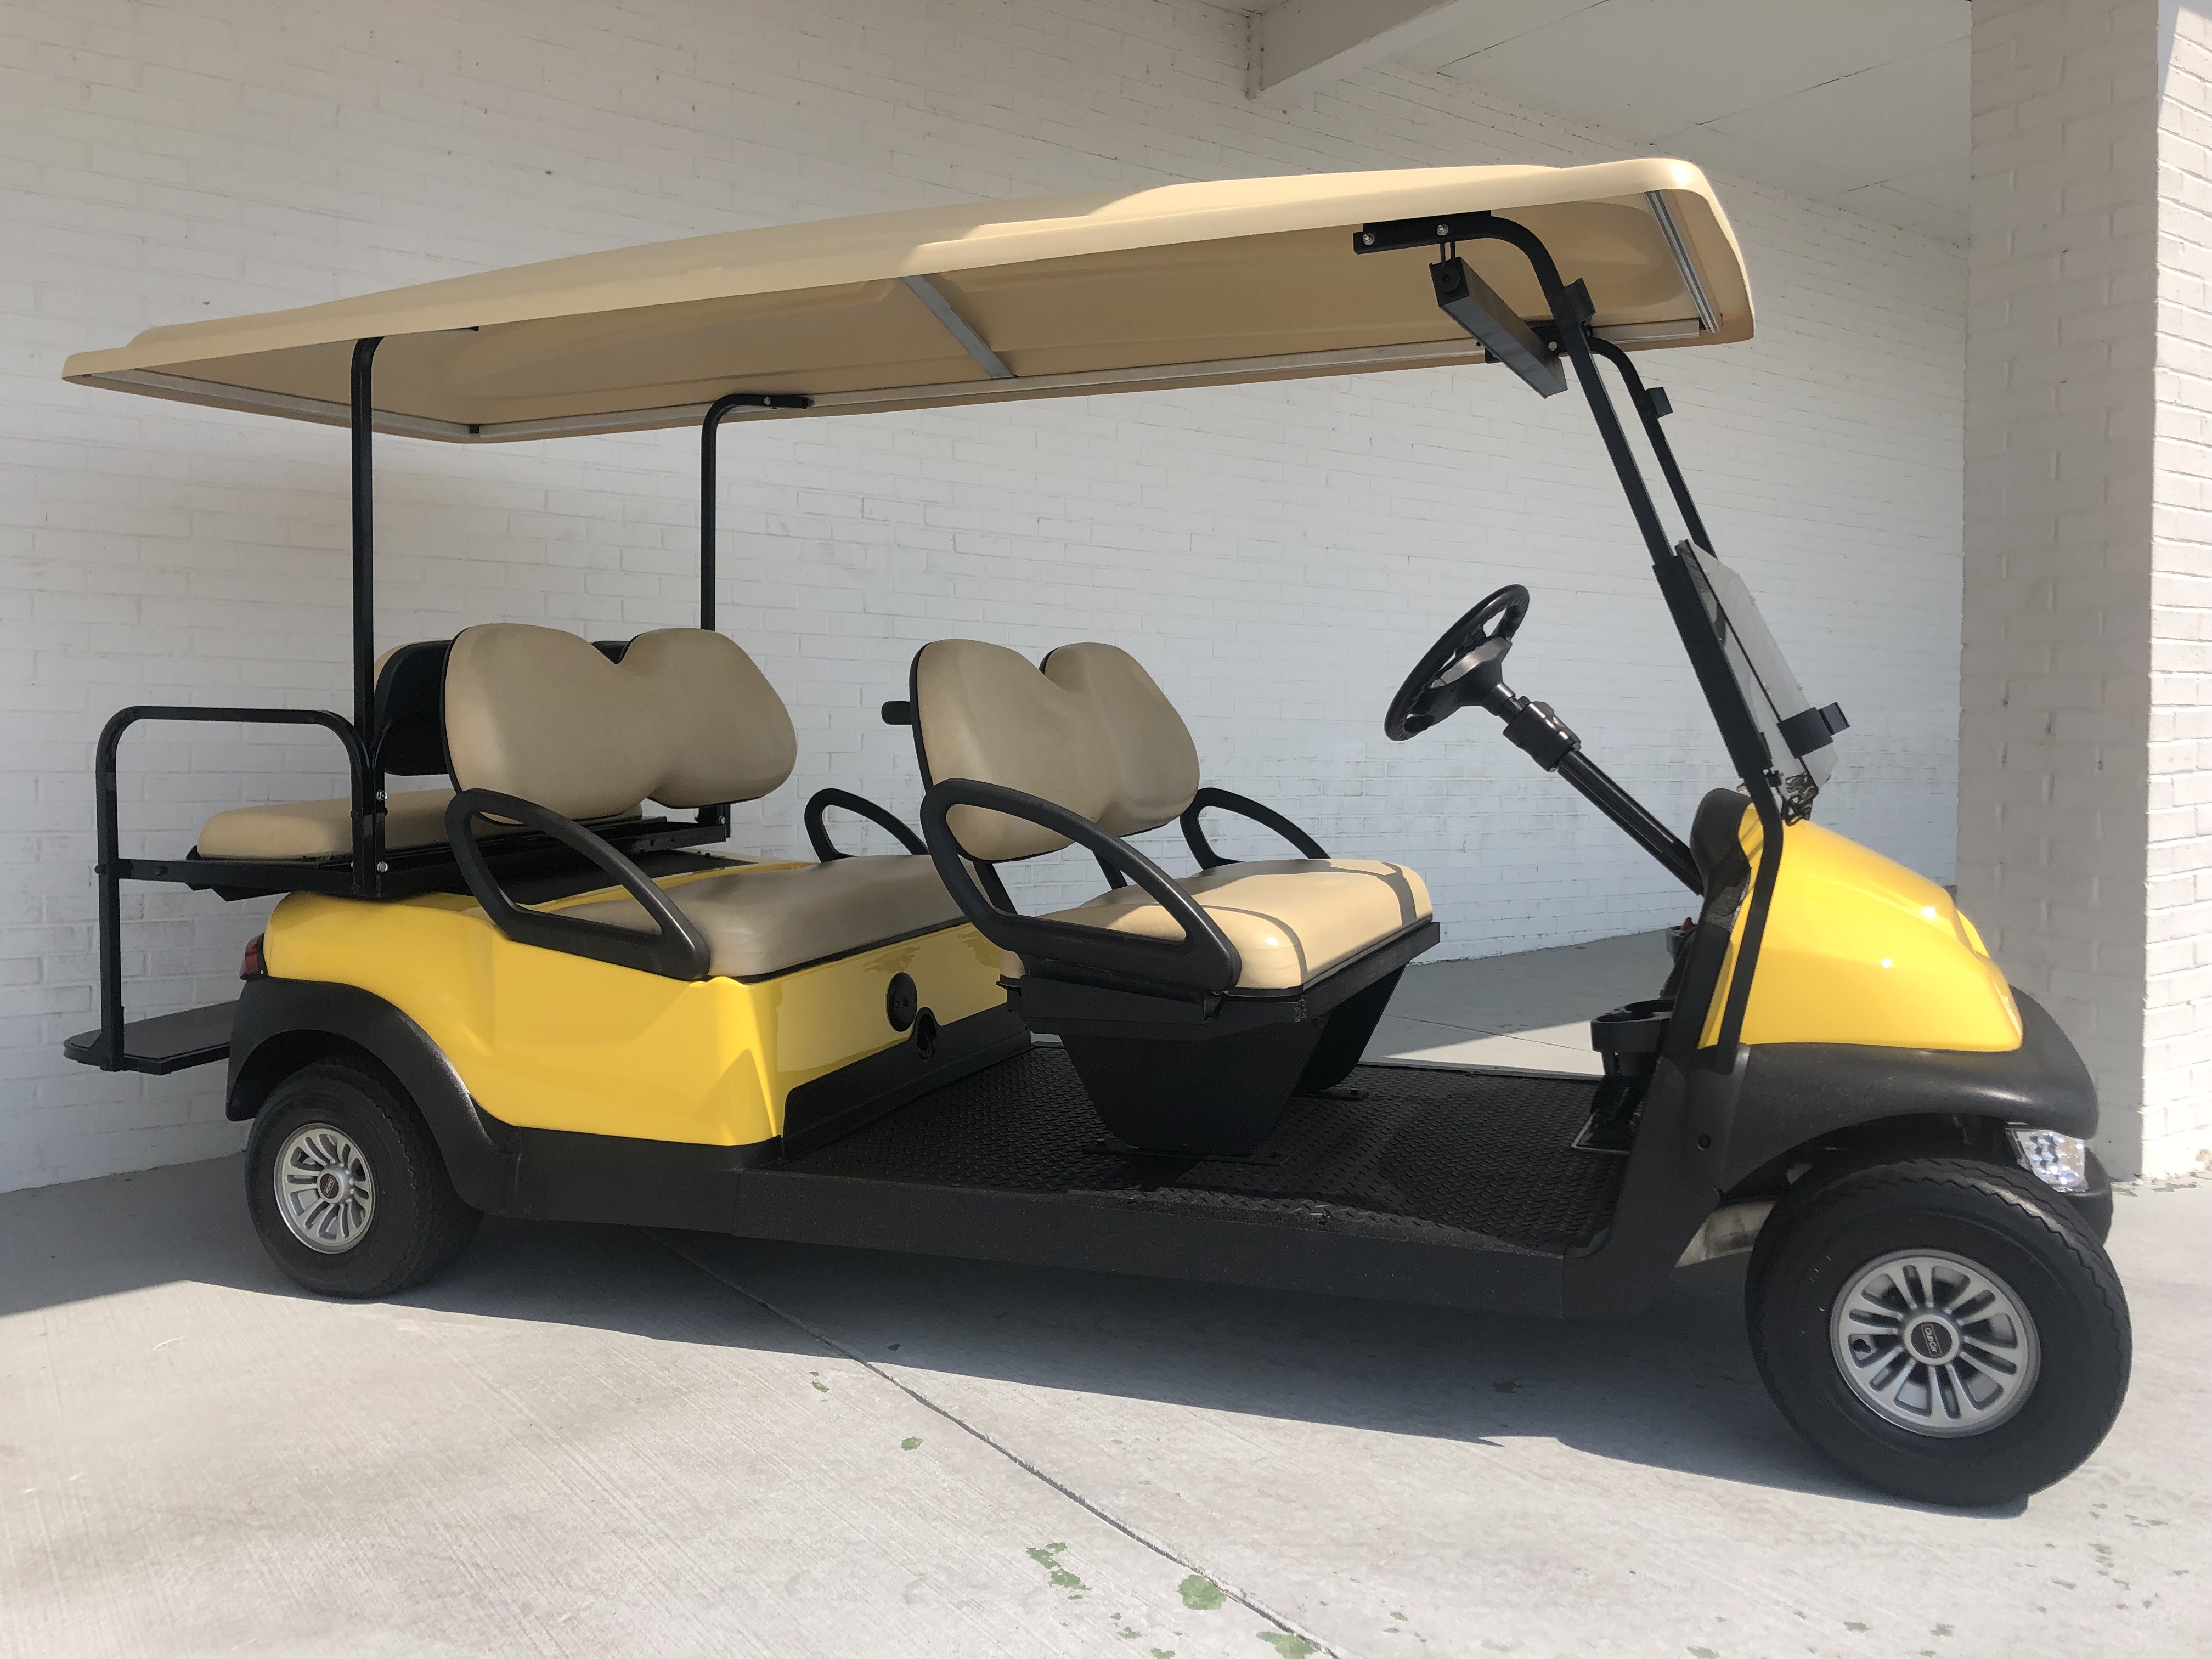 Six Passenger Limo Golf Cart Yellow Body Club Car Precedent